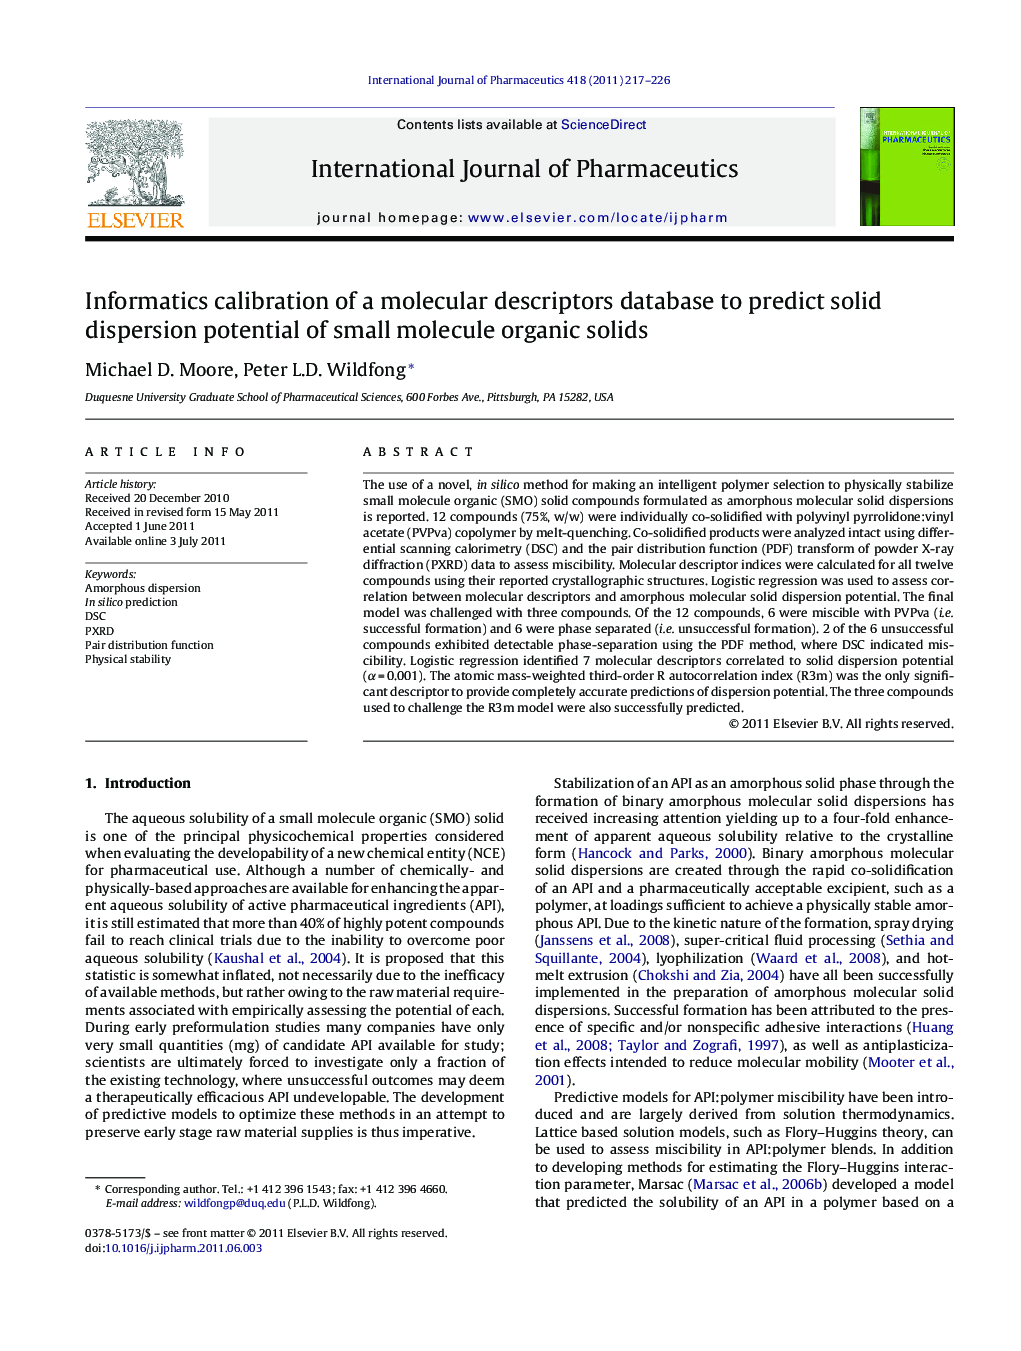 Informatics calibration of a molecular descriptors database to predict solid dispersion potential of small molecule organic solids